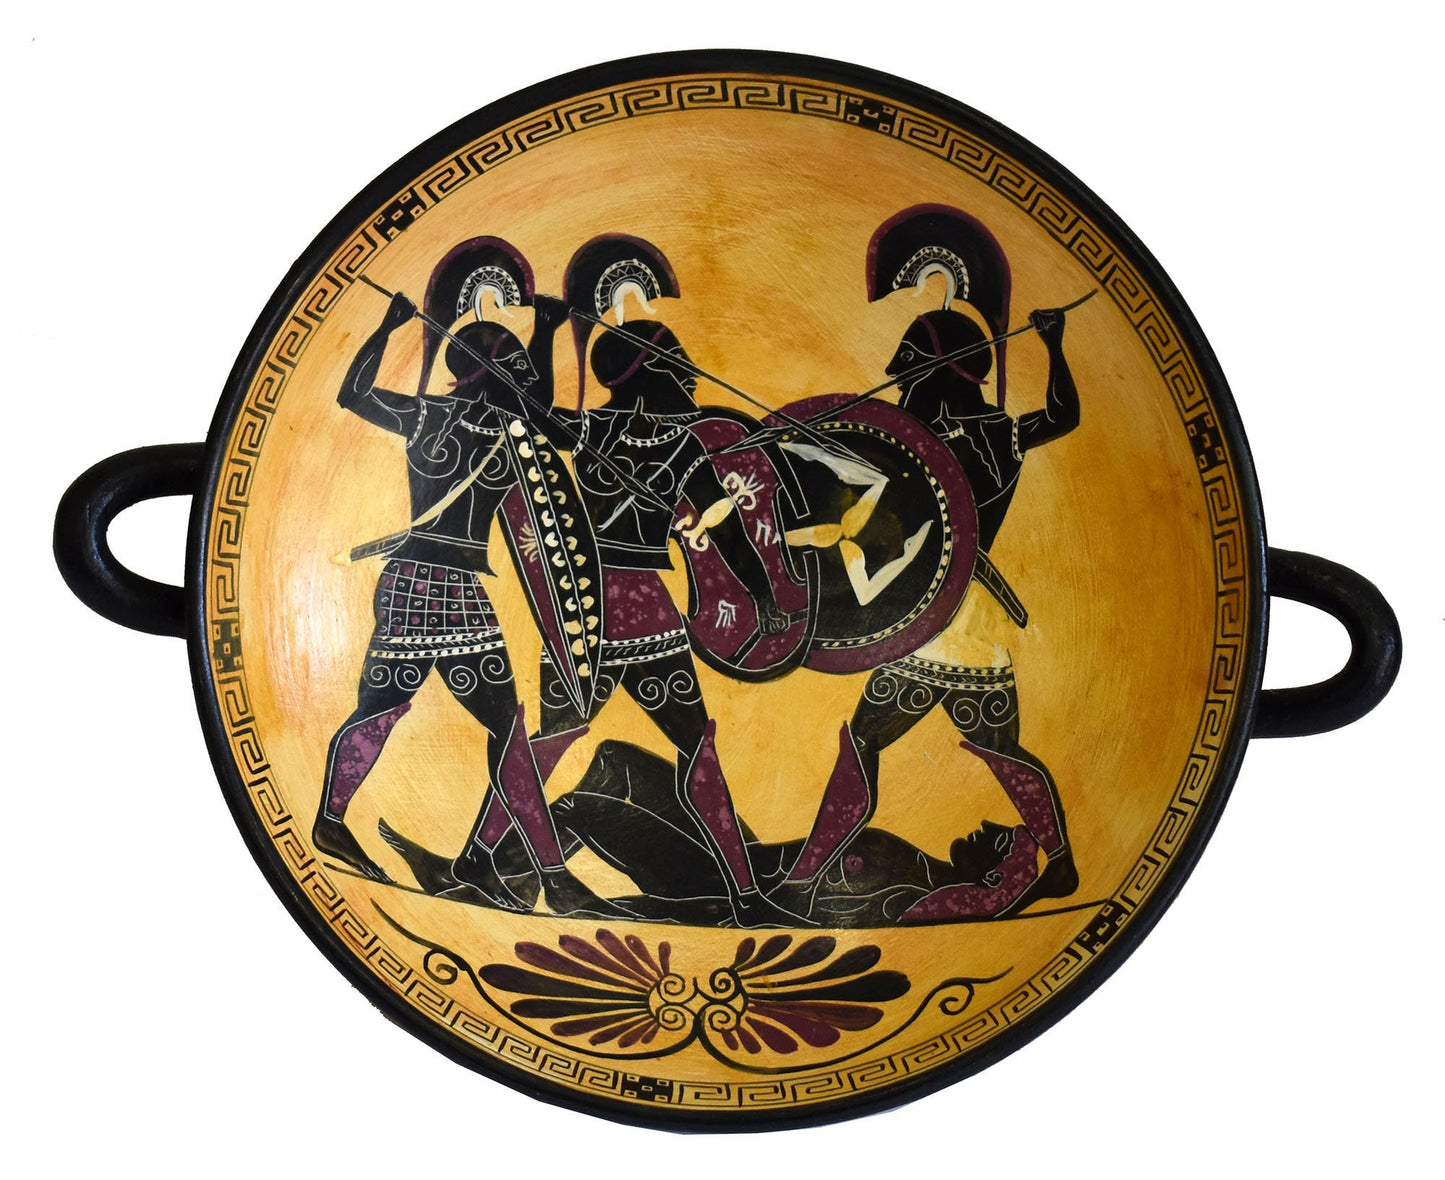 Achilles Hector Menelaos Paris -Trojan War - Homer's Iliad - Black Figure small Kylix Vase